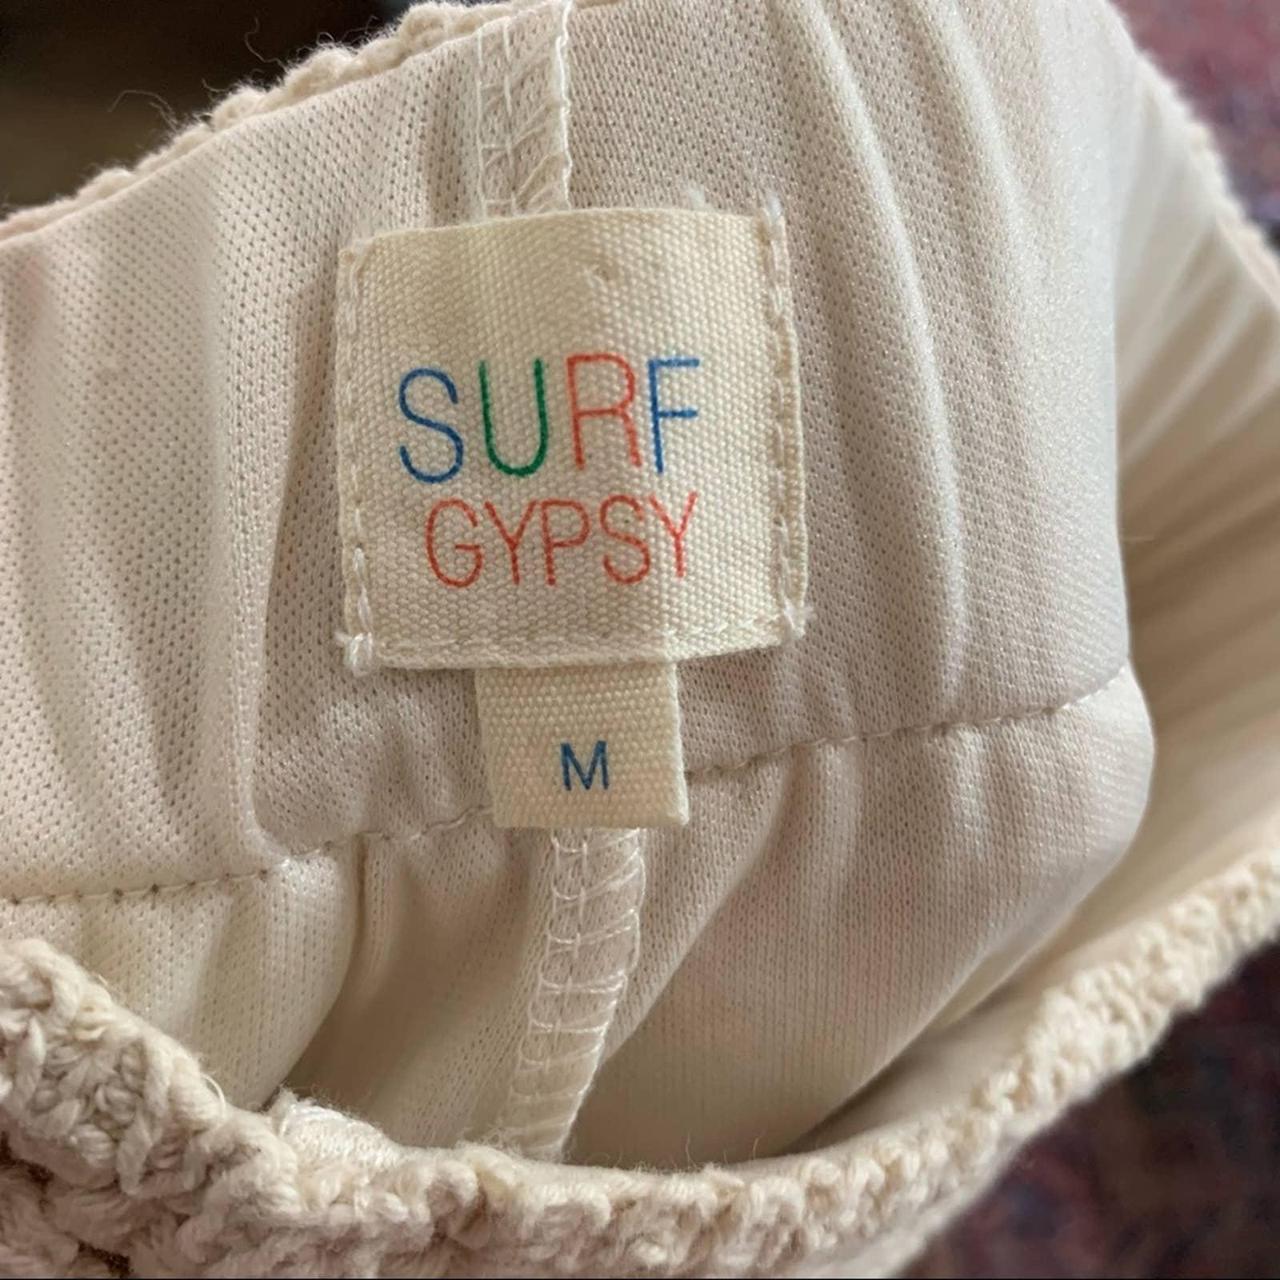 Surf Gypsy Women's Cream Shorts (4)